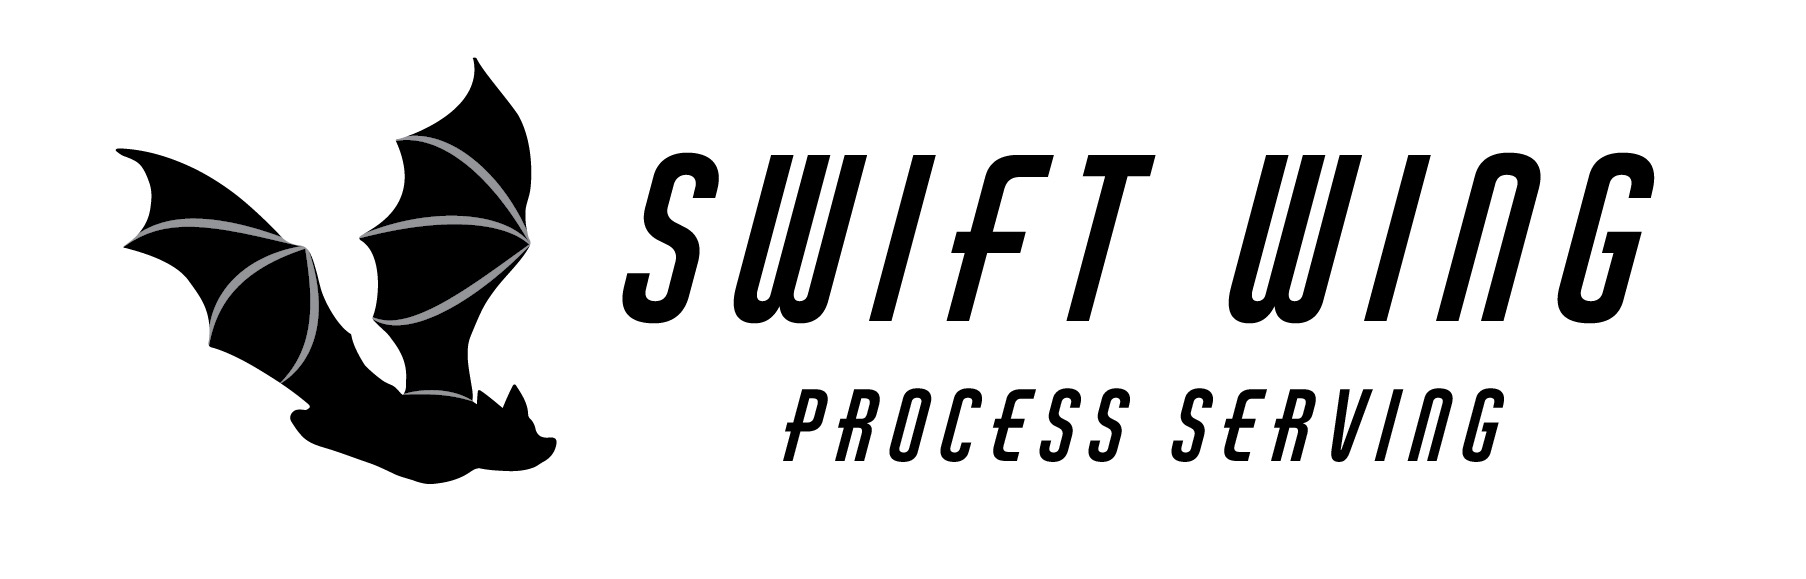 Swift Wing Process Serving Logo